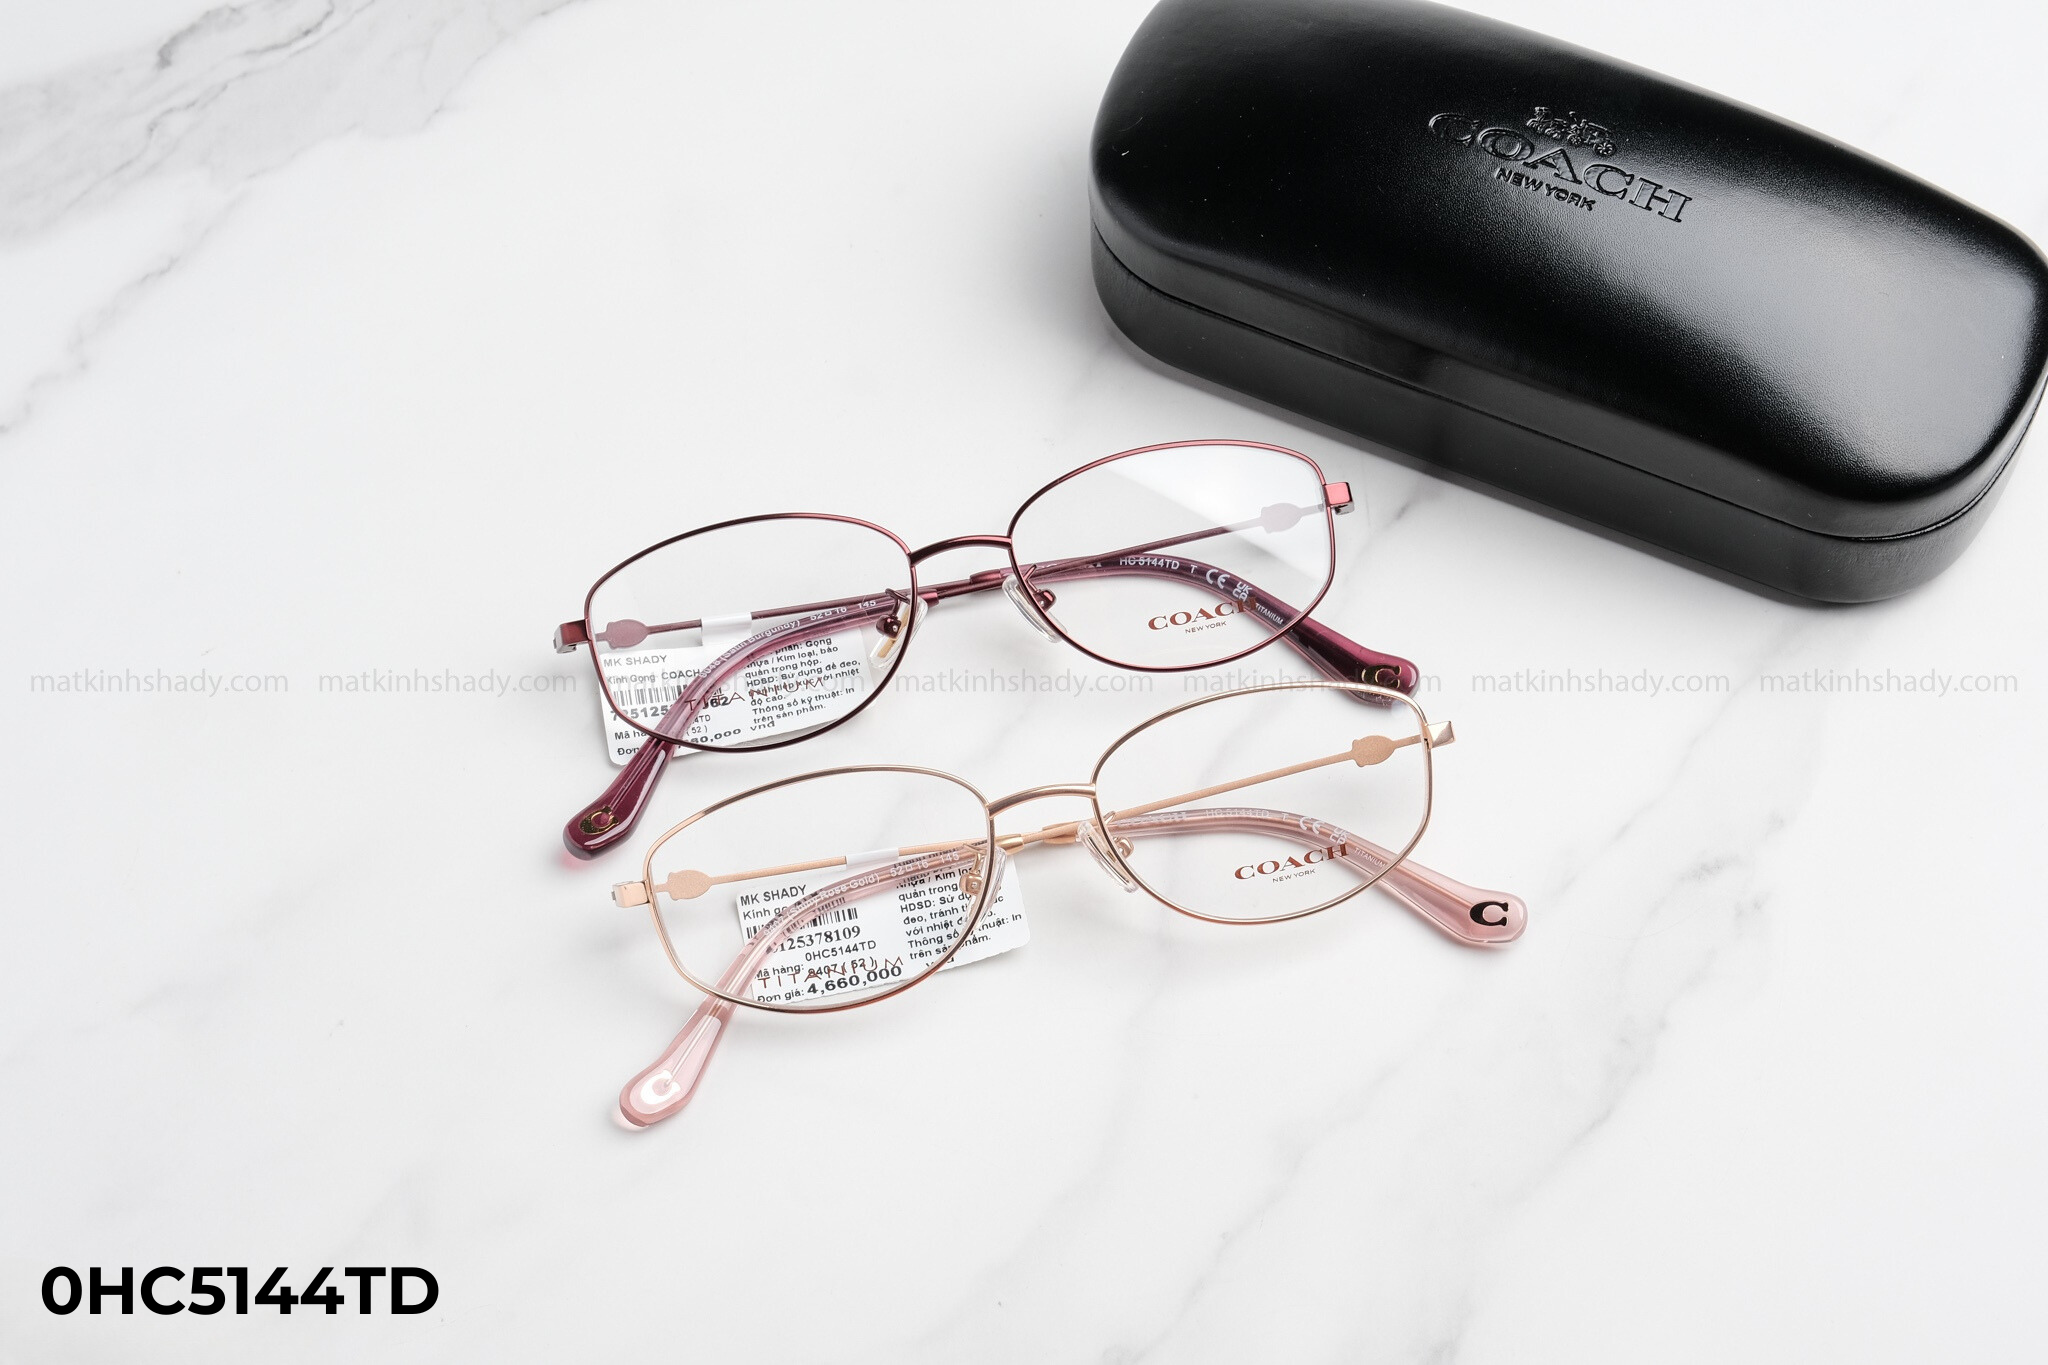  Coach Eyewear - Glasses - 0HC5144TD 